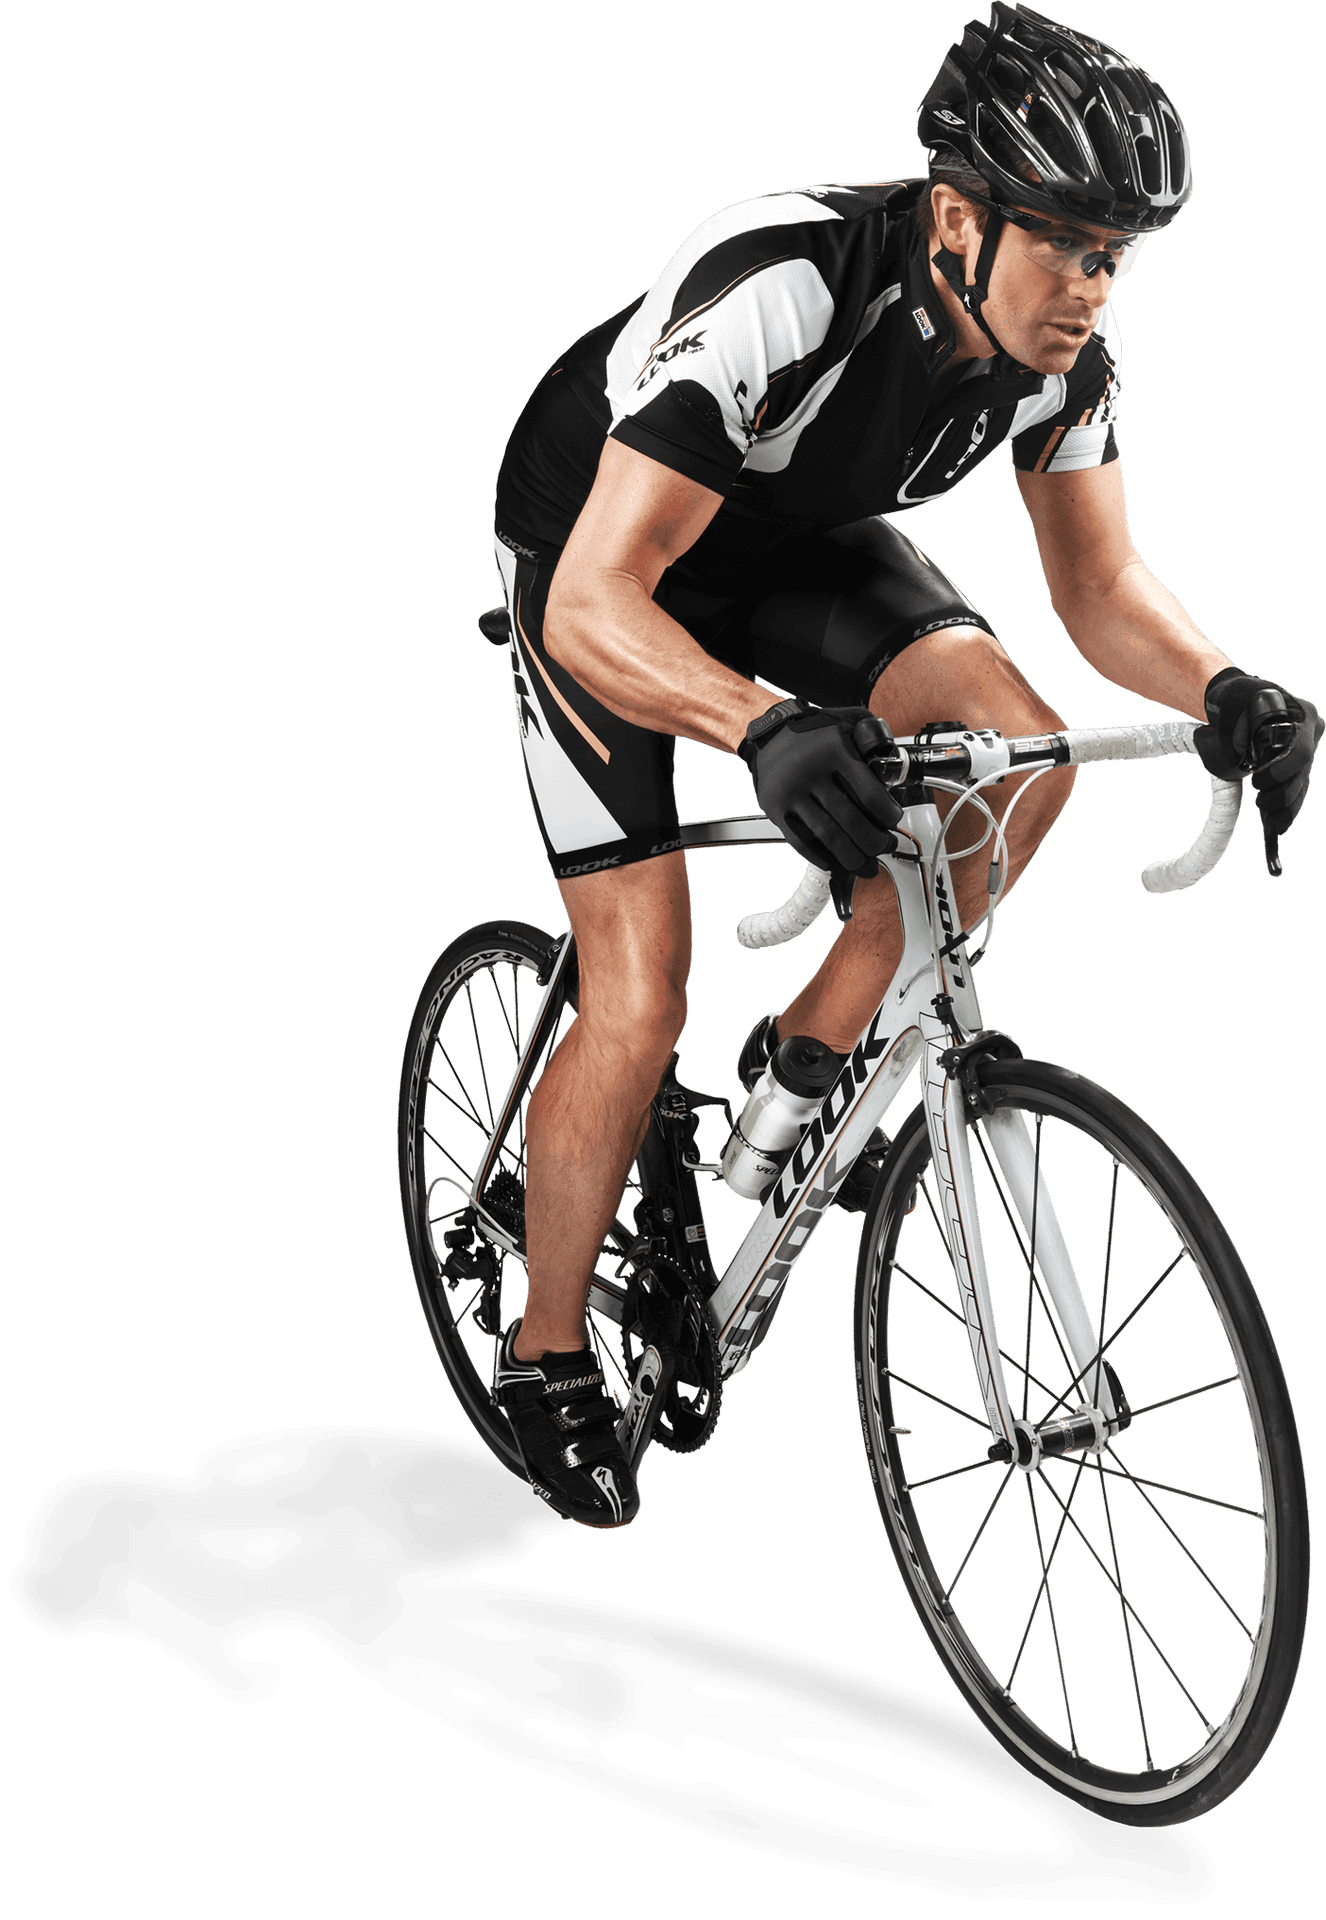 Cyclistin Action Road Biking PNG image